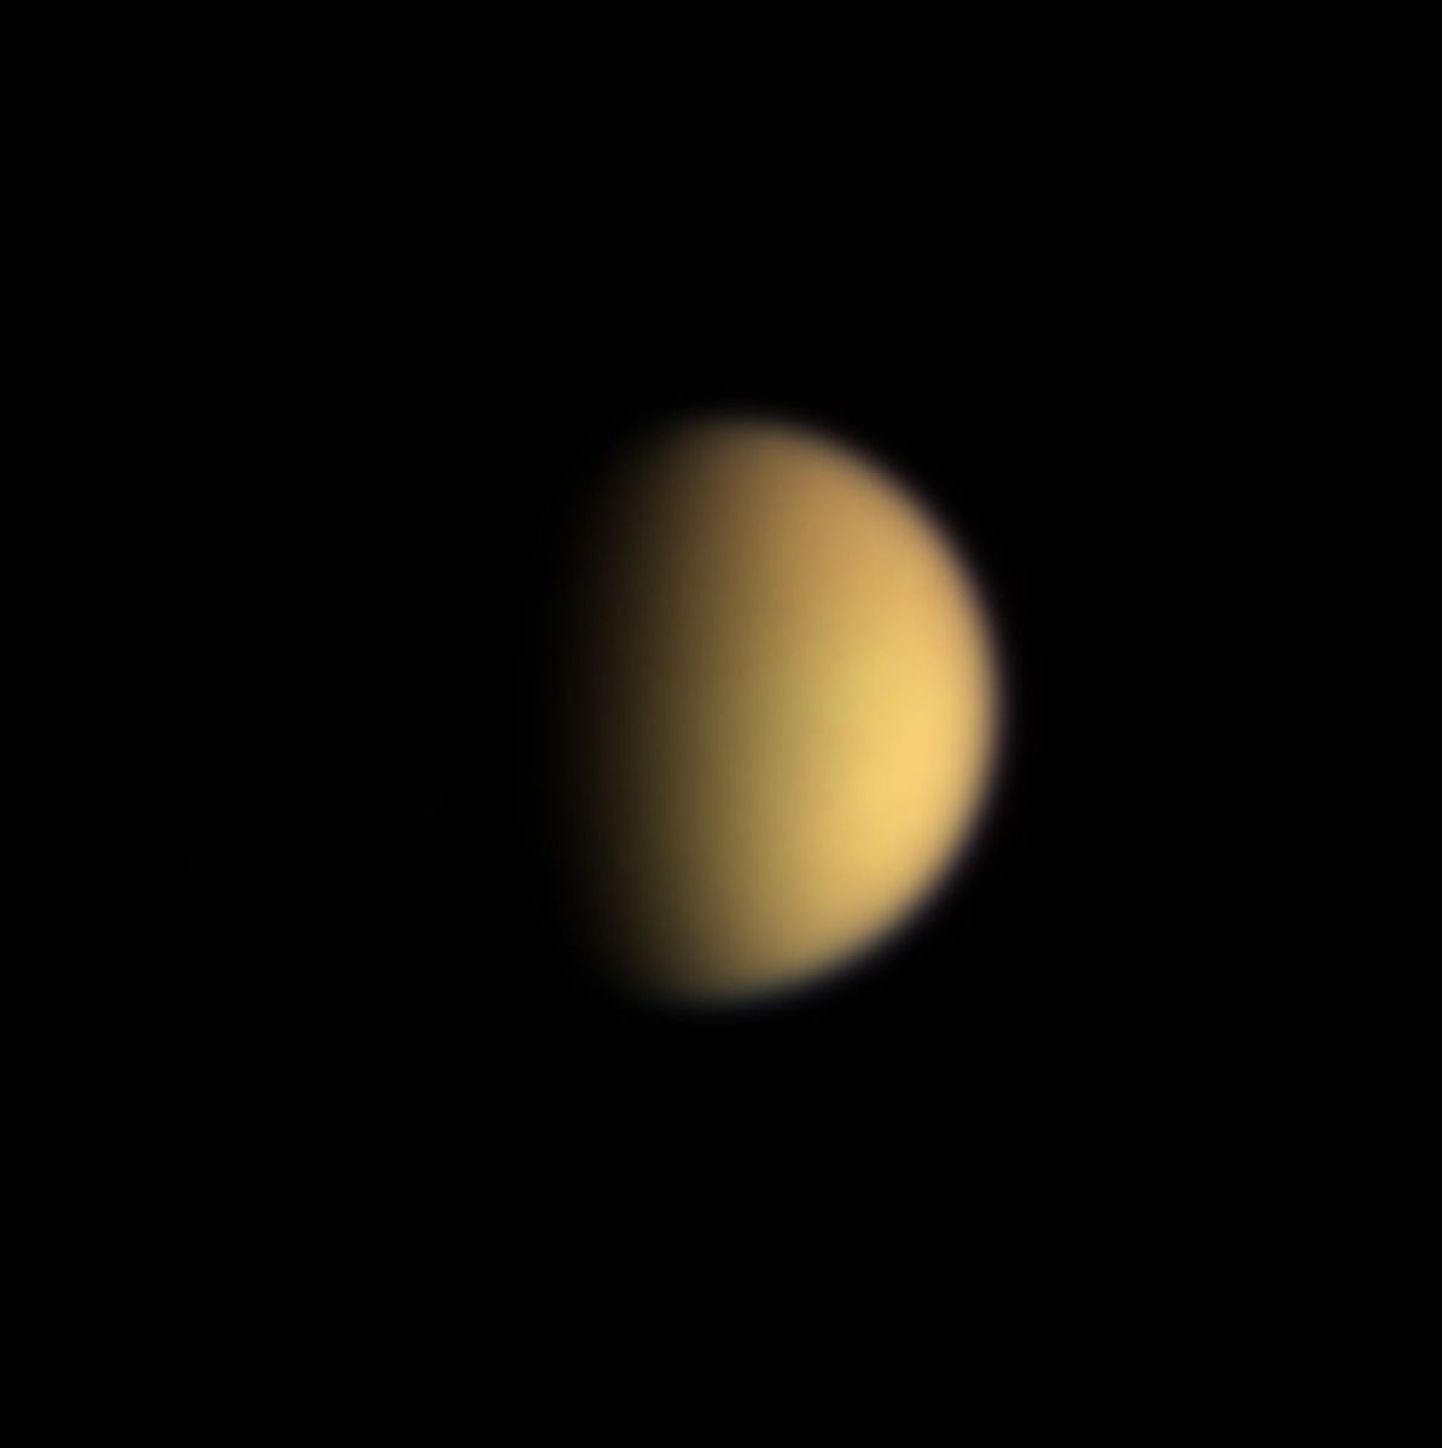 Saturni kuu Titan